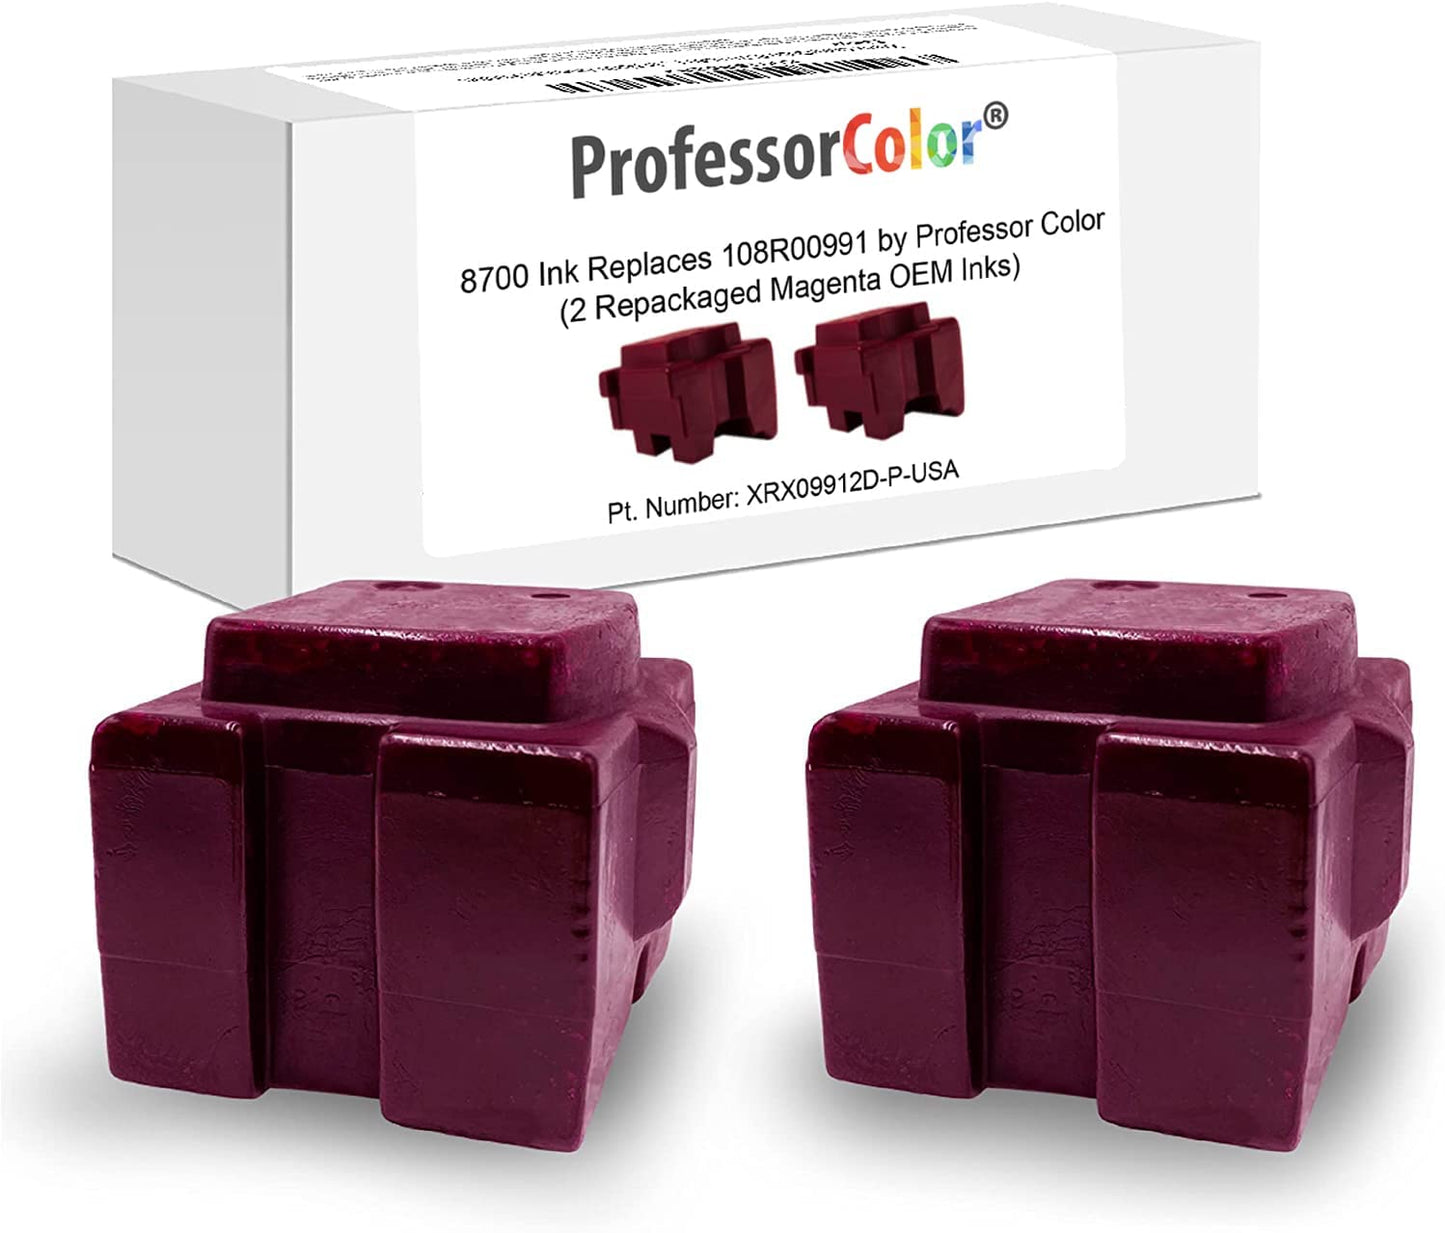 8700 Inks Replaces 108R00991 (2 Repackaged Magenta Inks) - Professor Color